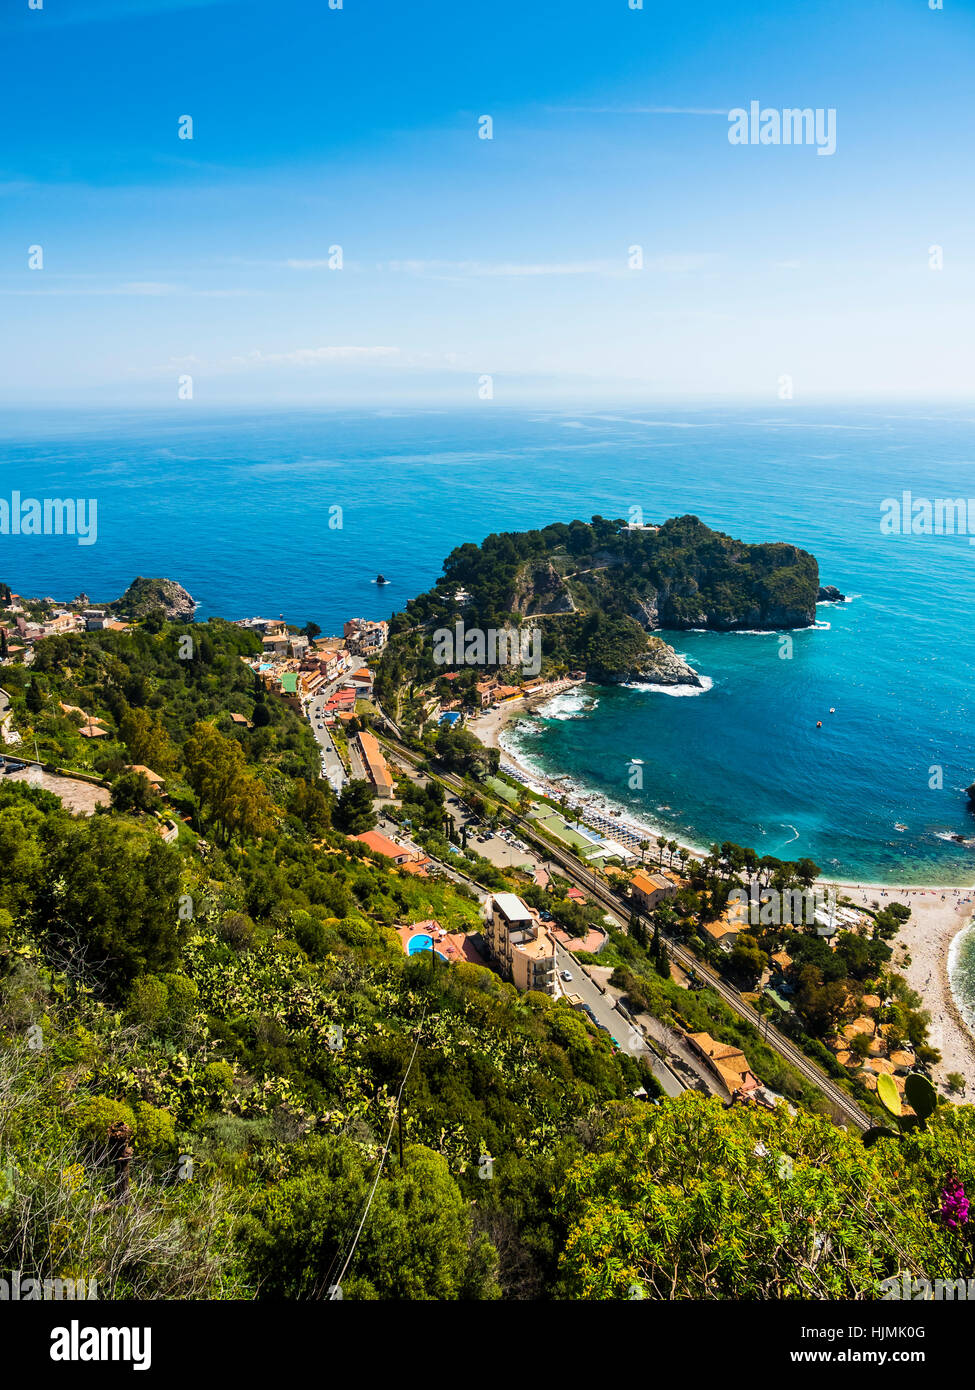 Italy, Sicily, Taormina, view to Isola Bella Stock Photo